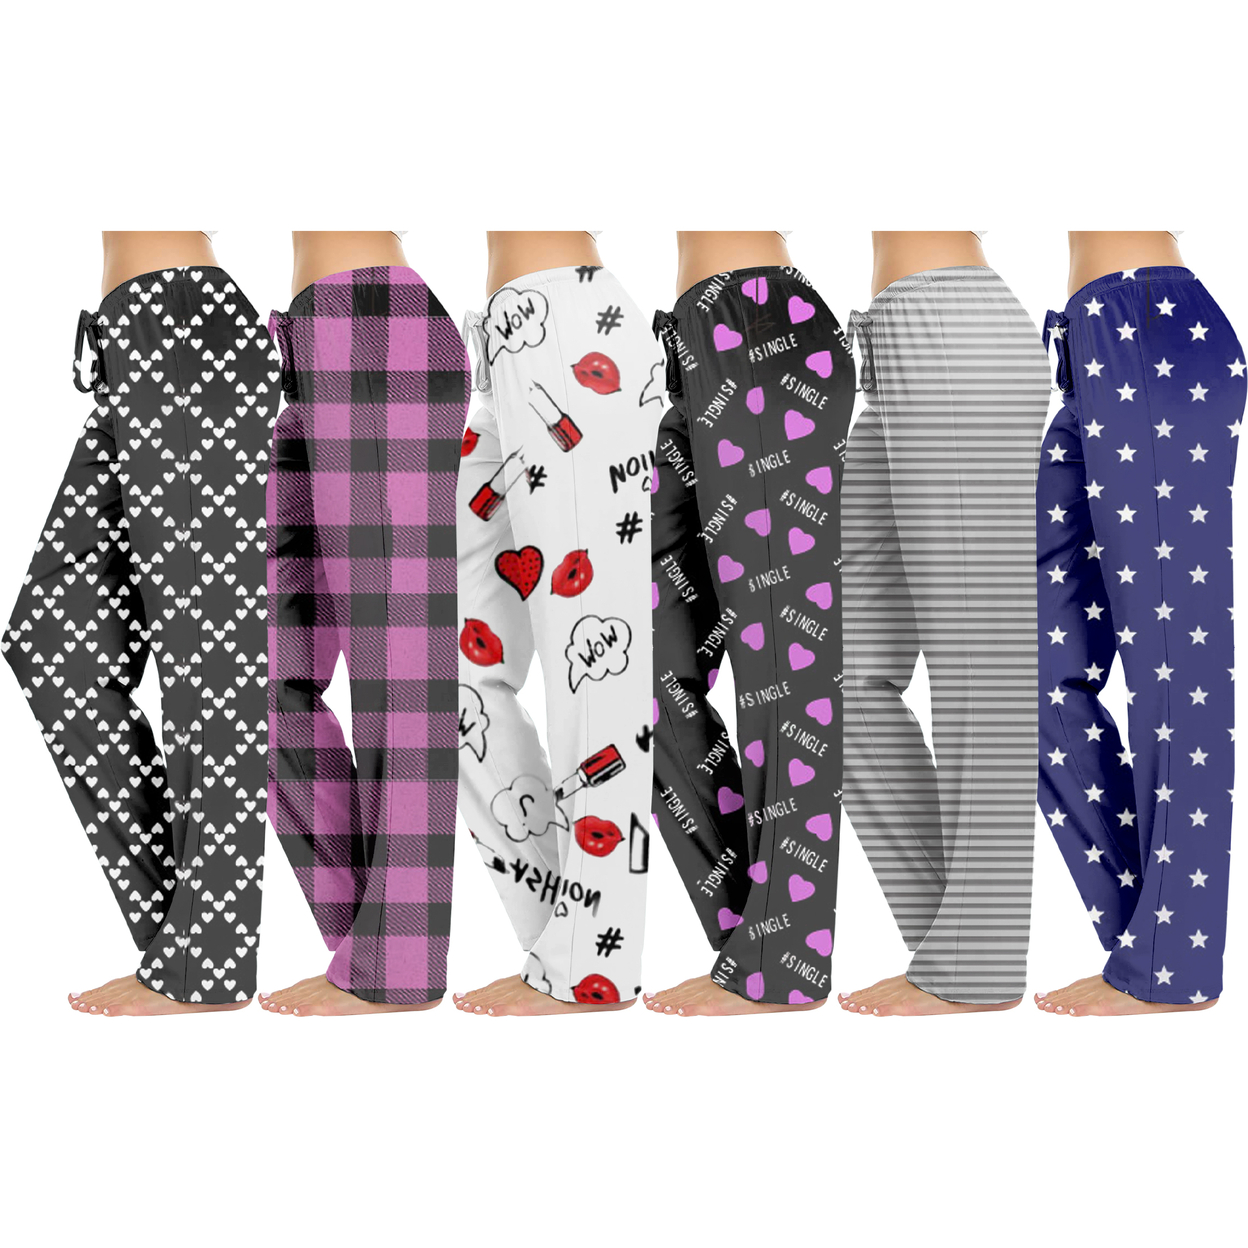 Women's Casual Fun Printed Soft Lightweight Lounge Terry Knit Pajama Bottom Pants - X-large, Love